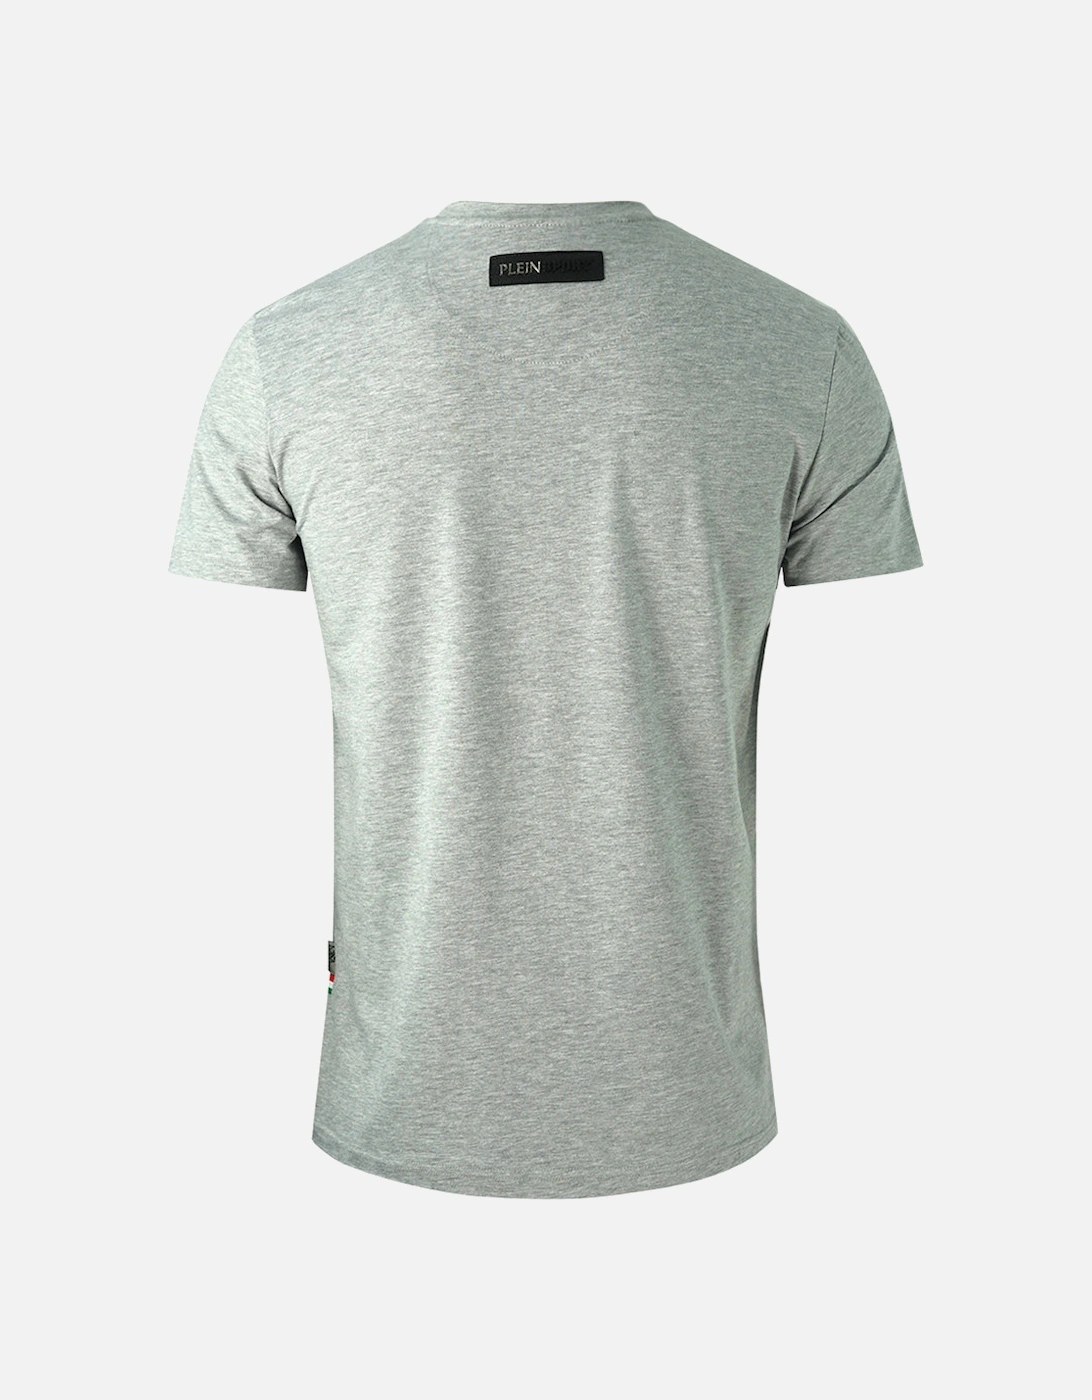 Plein Sport Brand Signature Logo Grey T-Shirt